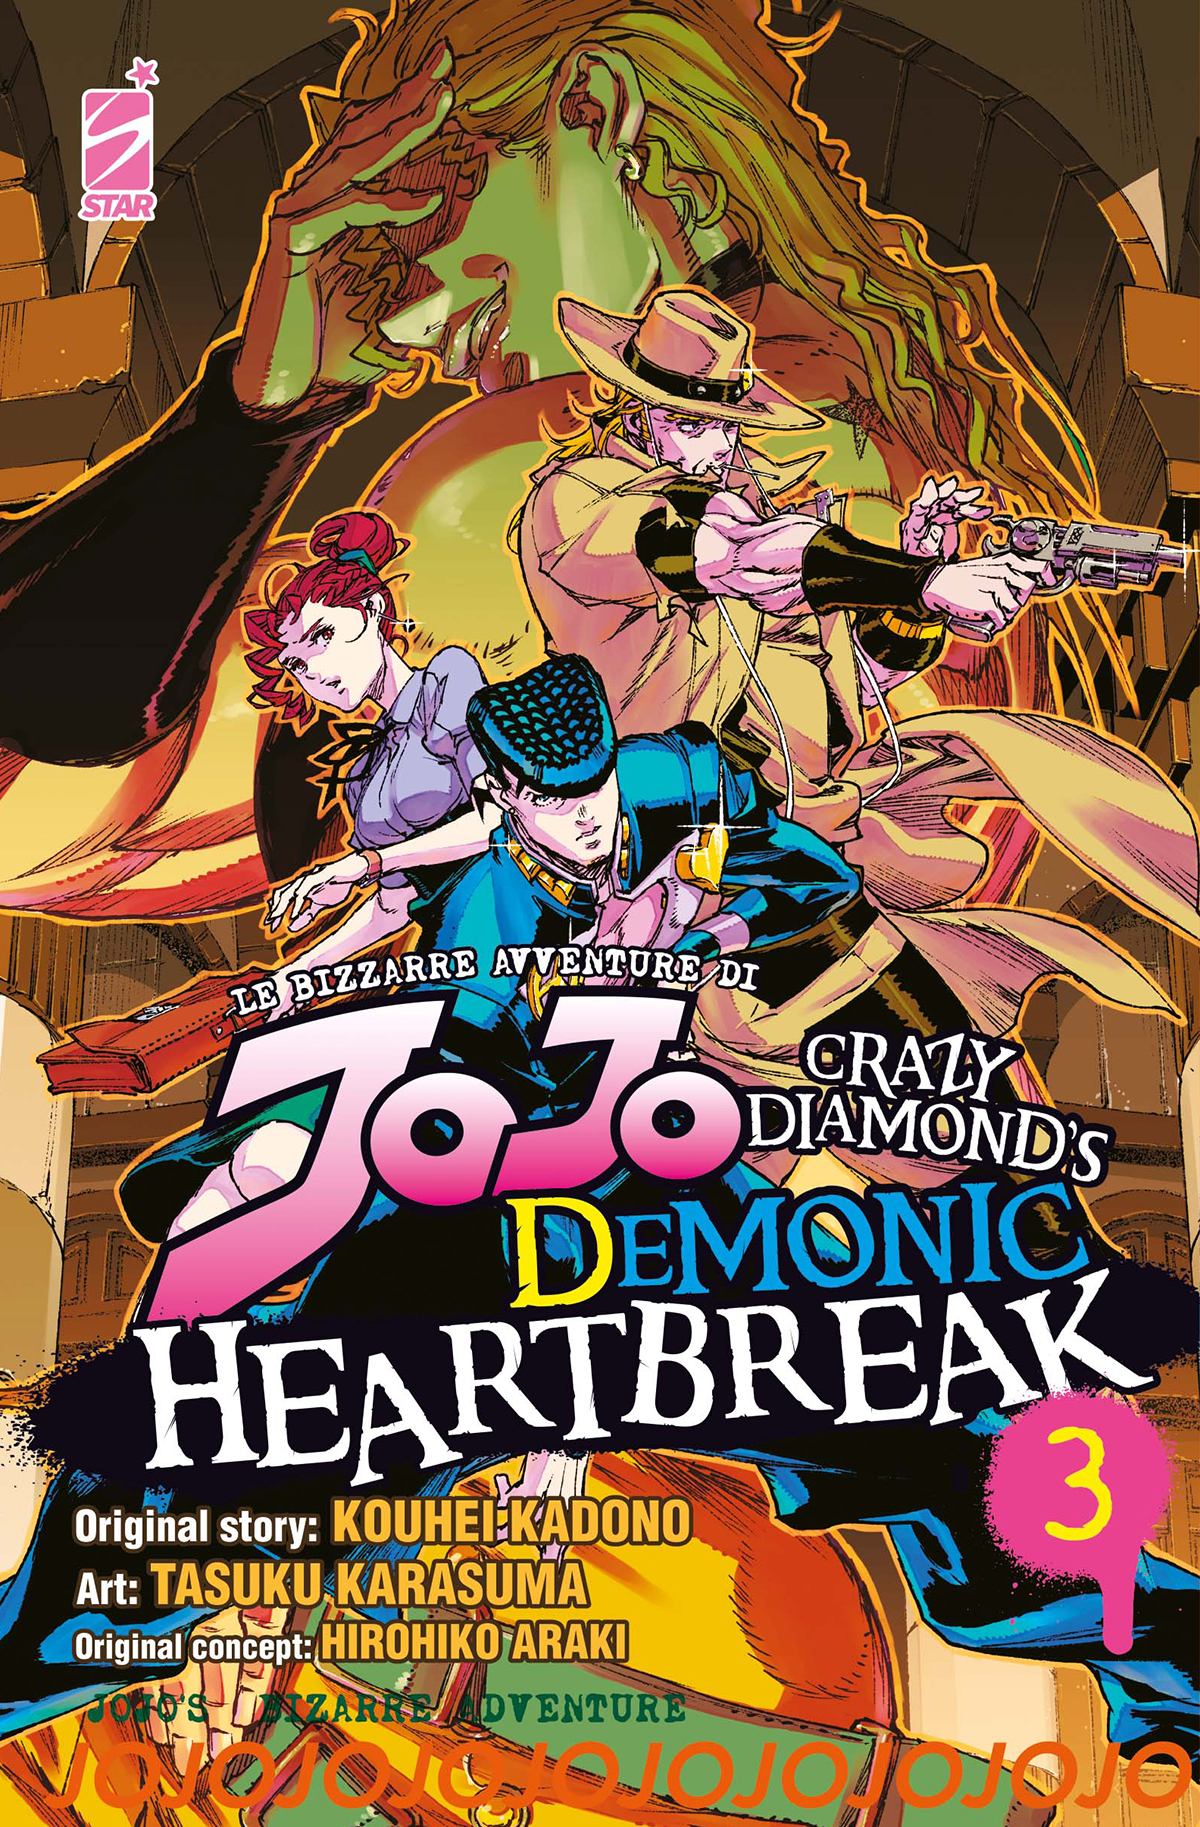 ACTION #356JOJO CRAZY DIAMOND'S DEMONIC HEARTBREAK N.03